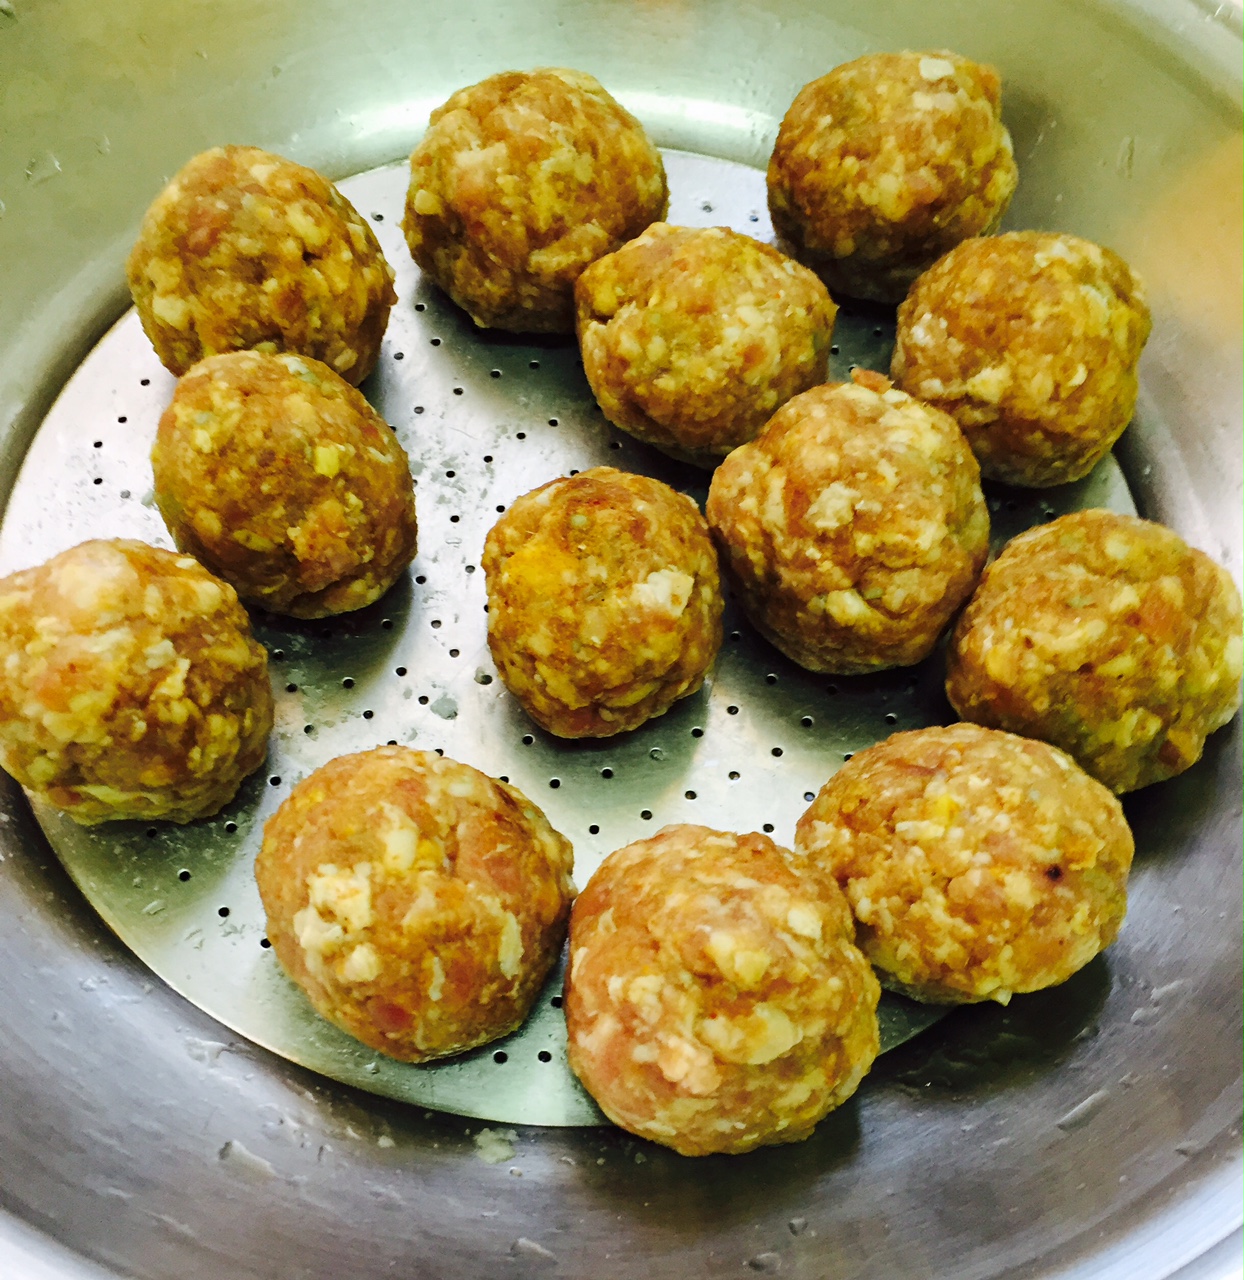 Meat ball curry with potatoes (Kofta)